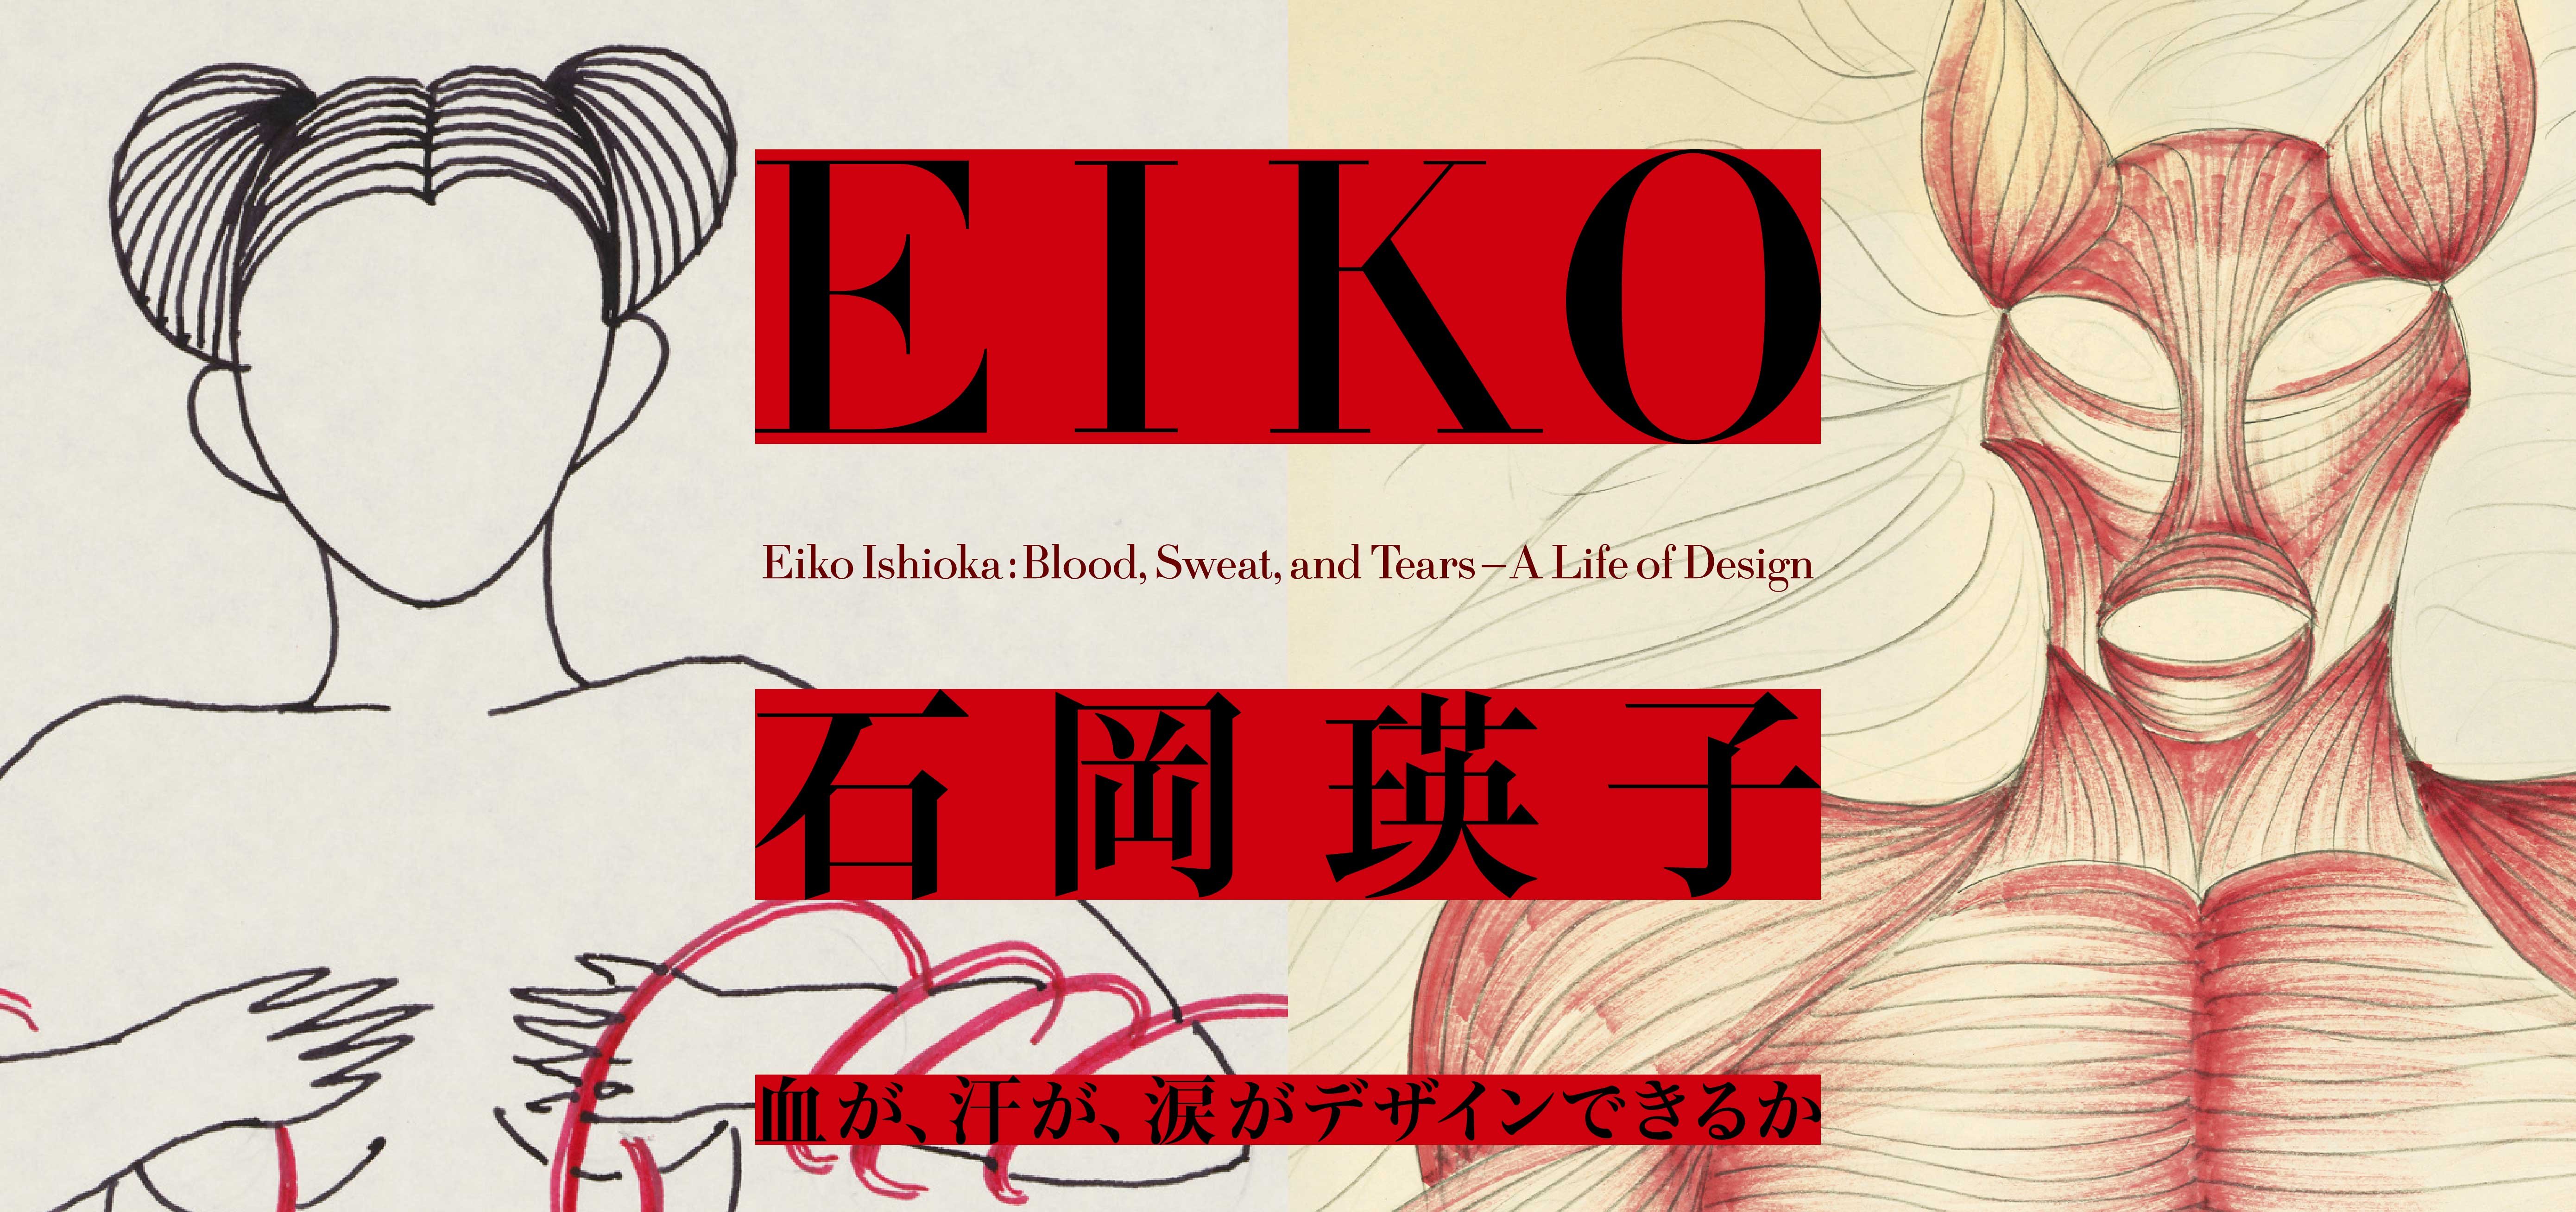 Inimitably Eiko: A Look Back At the Costume Design of Ishioka Eiko